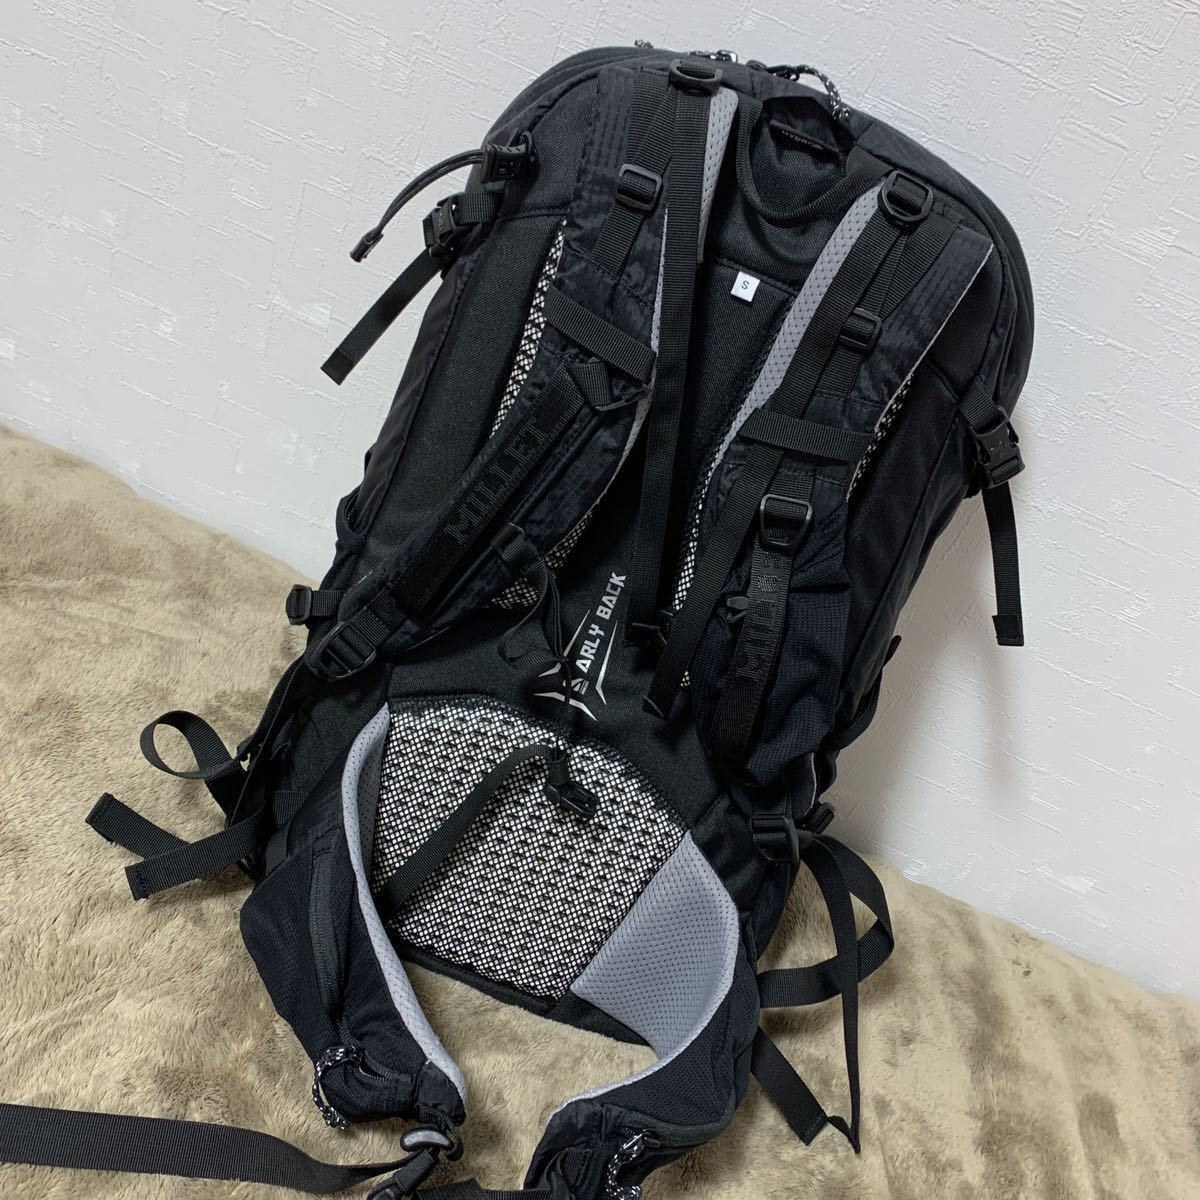 MILLET Millet рюкзак MIS0644 ARLY30 цвет 0247 BLACK-NOIR размер S 2019 год 7 месяц покупка 1 раз использование 